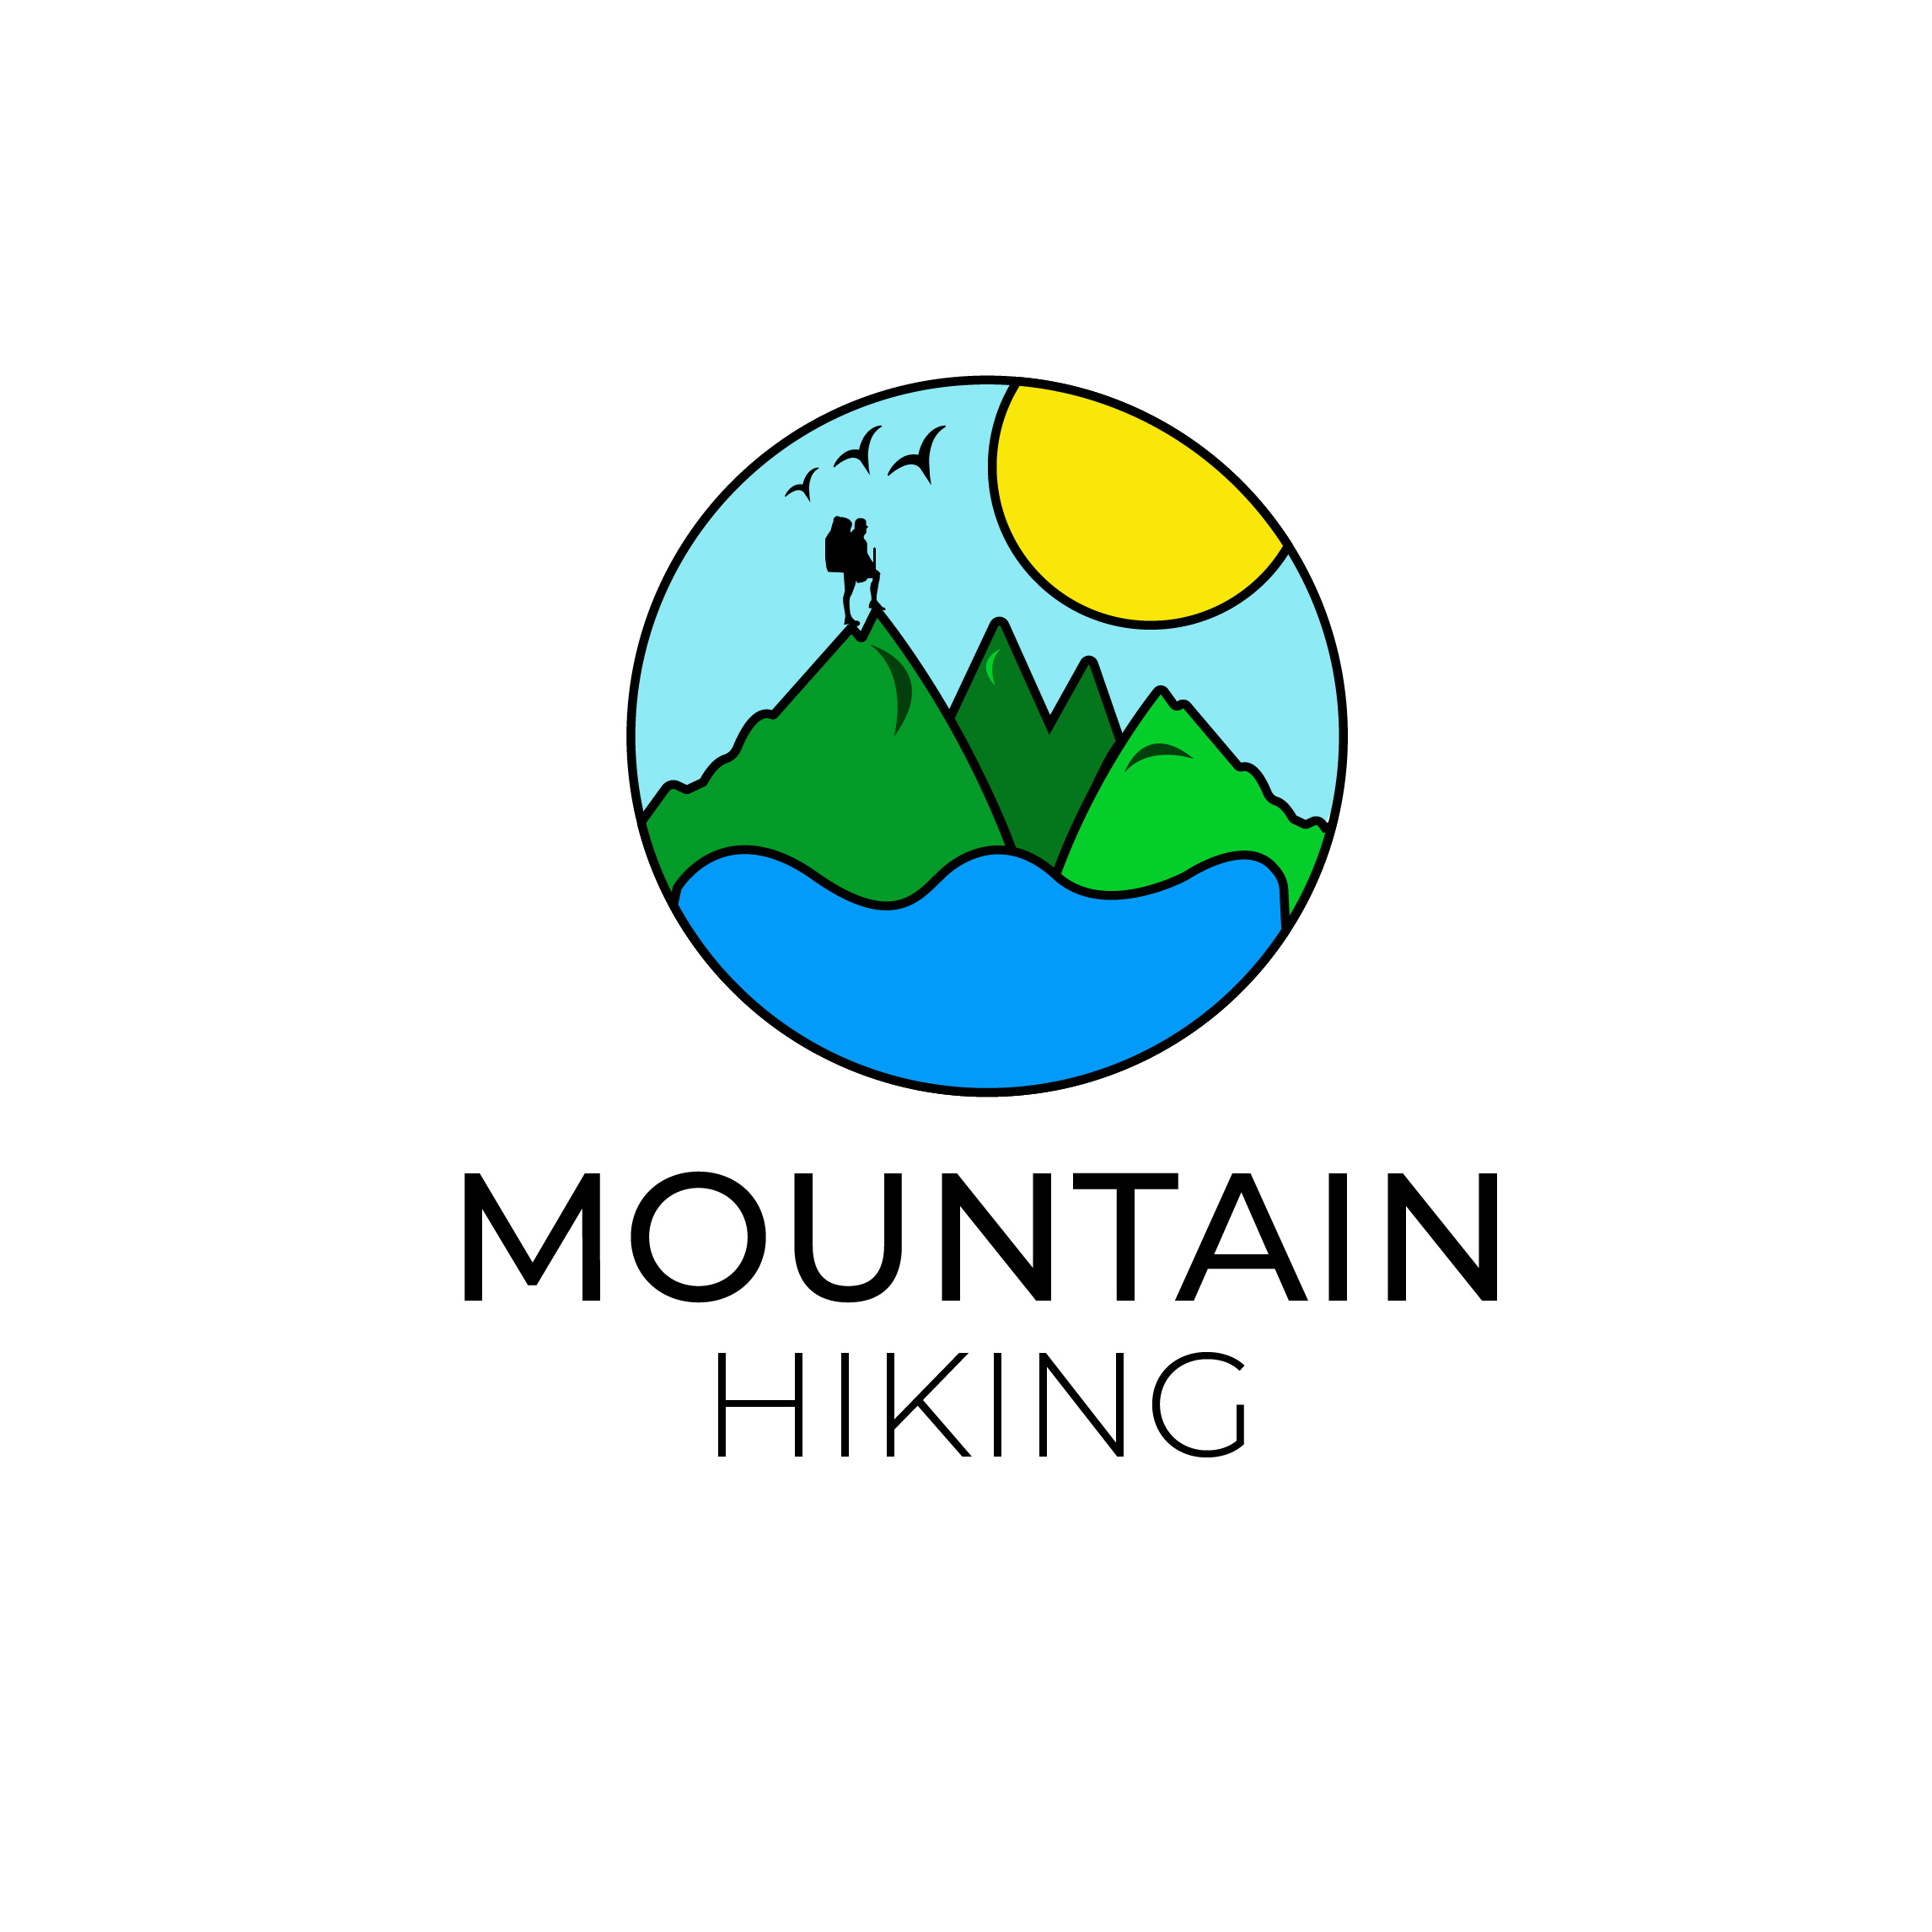 mountain hiking logo 01 01 01 1